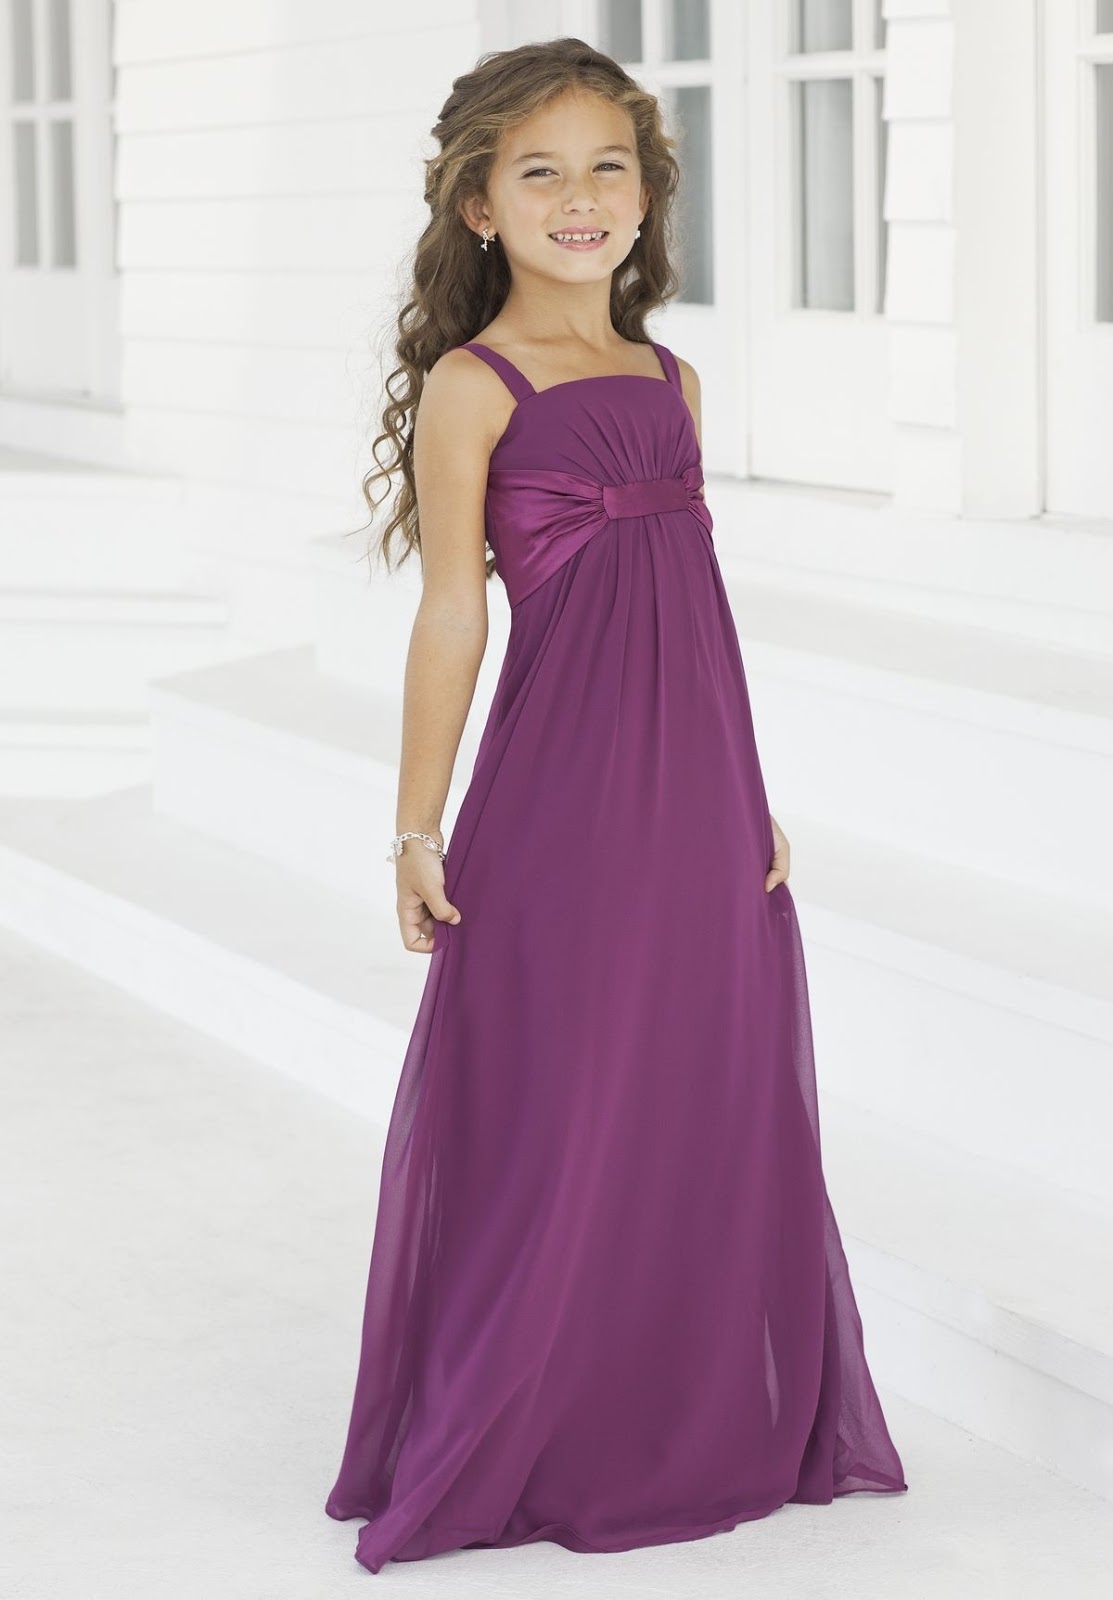 WhiteAzalea Junior  Dresses  October 2012